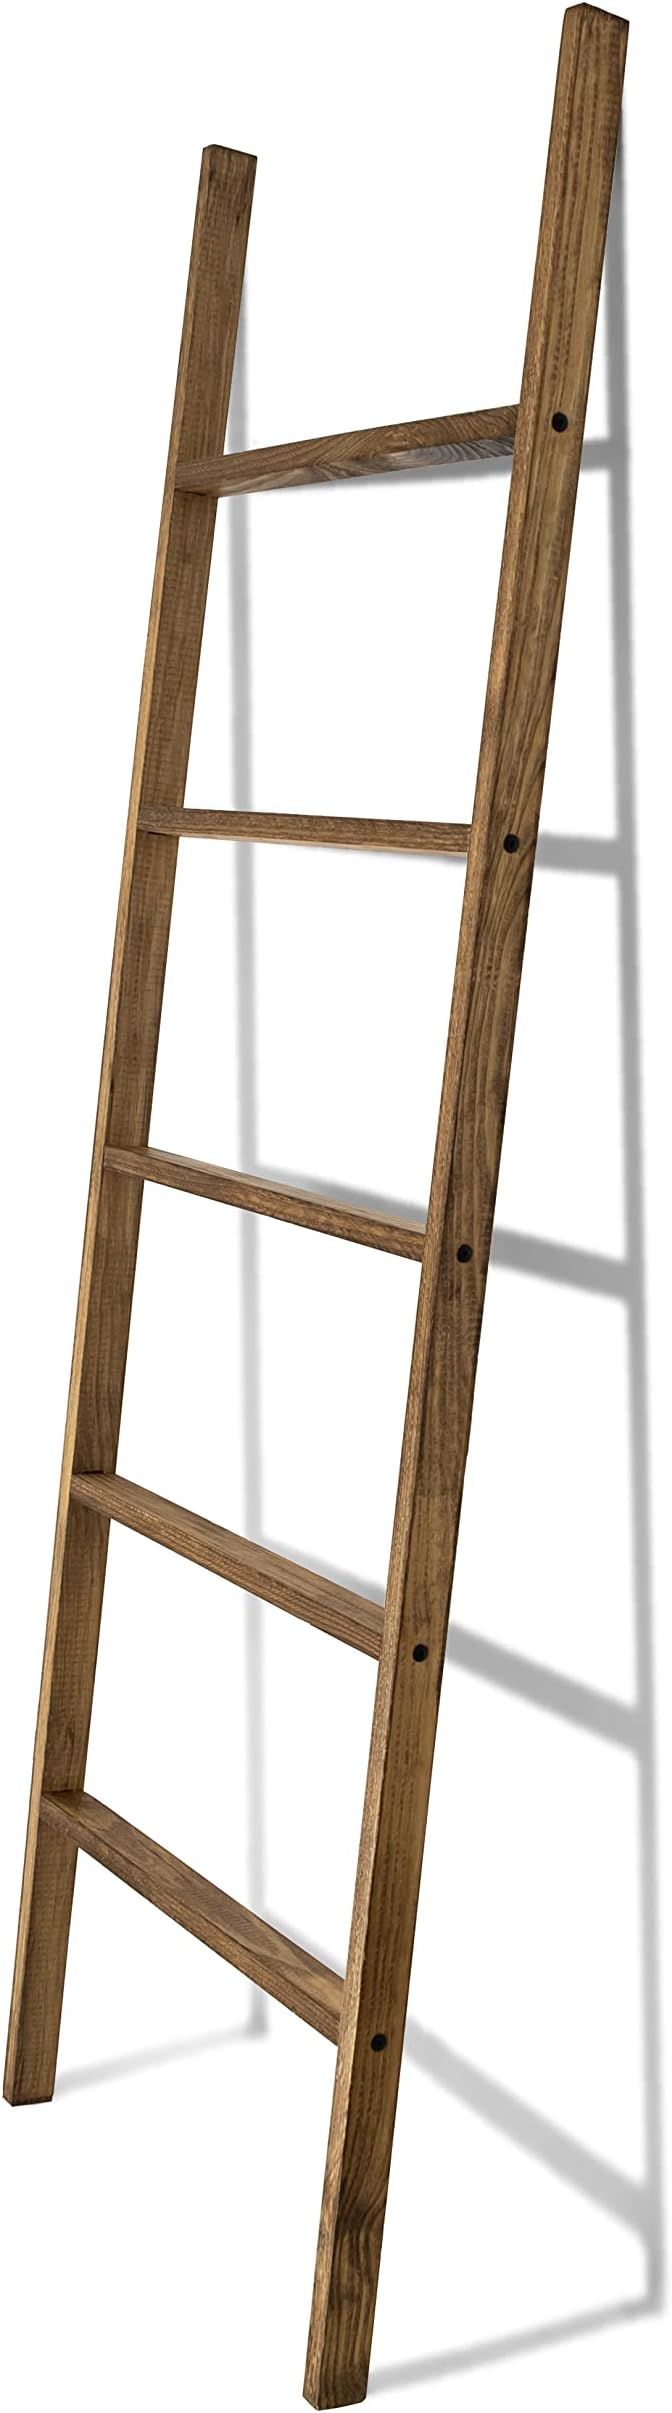 Farmhouse Accents USA Rustic Blanket Ladder - Dark Brown Distressed Stain - Throw Blanket Storage... | Amazon (US)